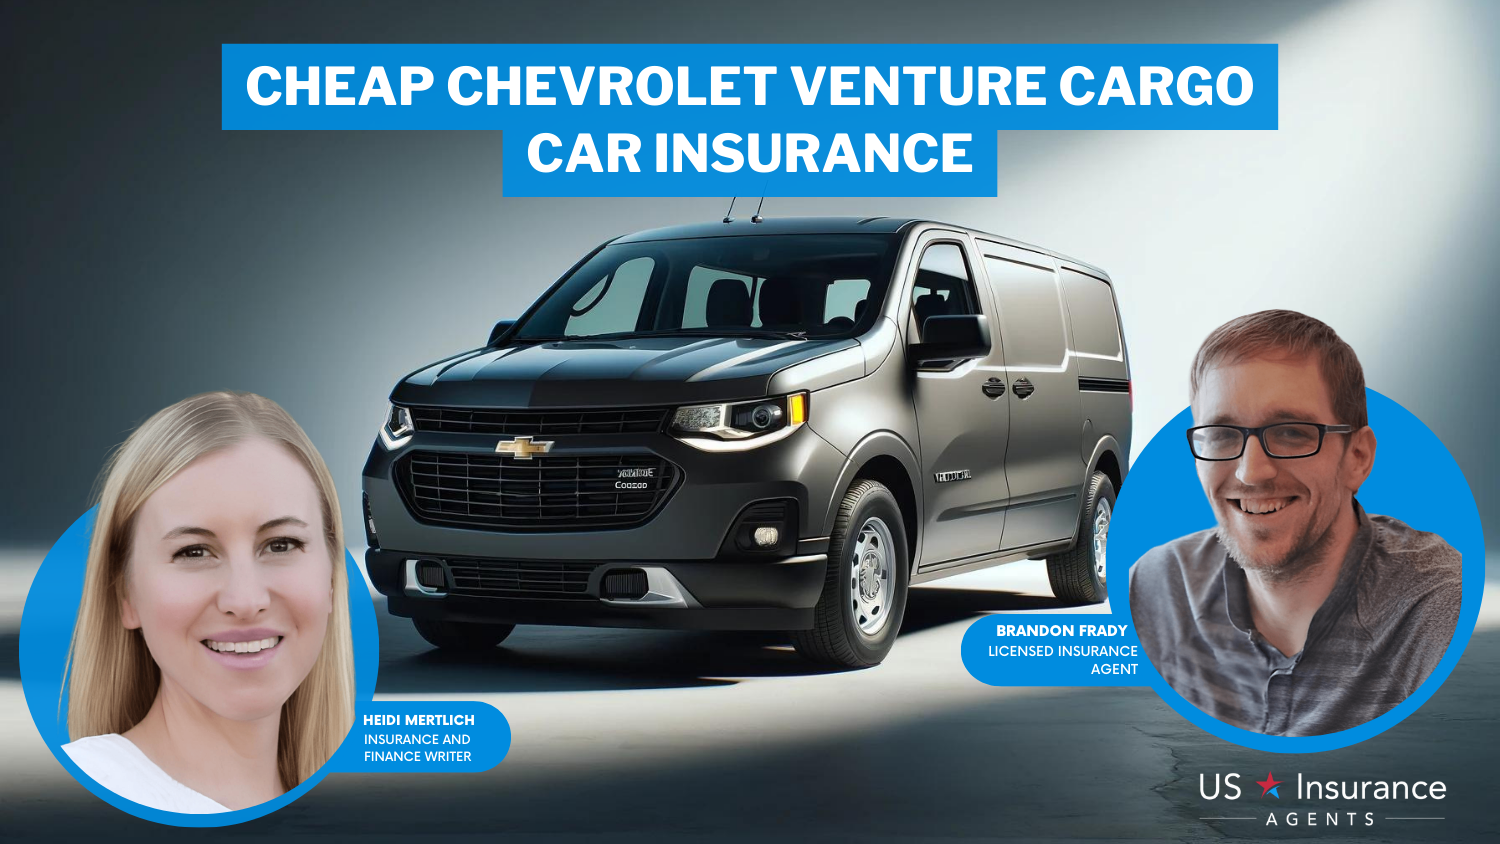 Cheap Chevrolet Venture Cargo Car Insurance: Chubb, AAA, and USAA